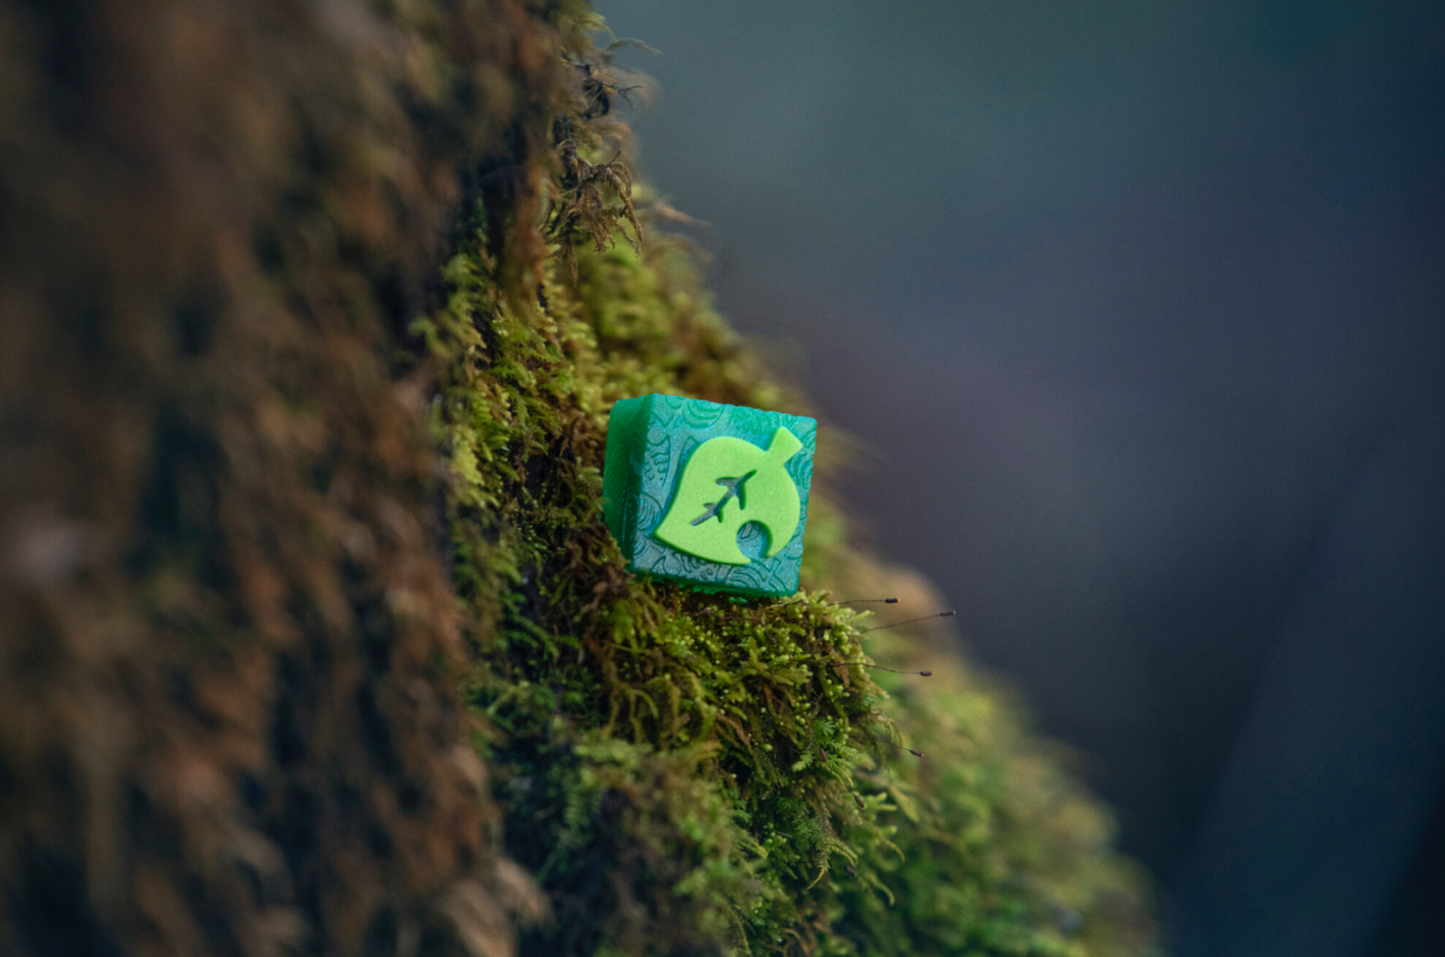 AC leaf cube keycap in nature